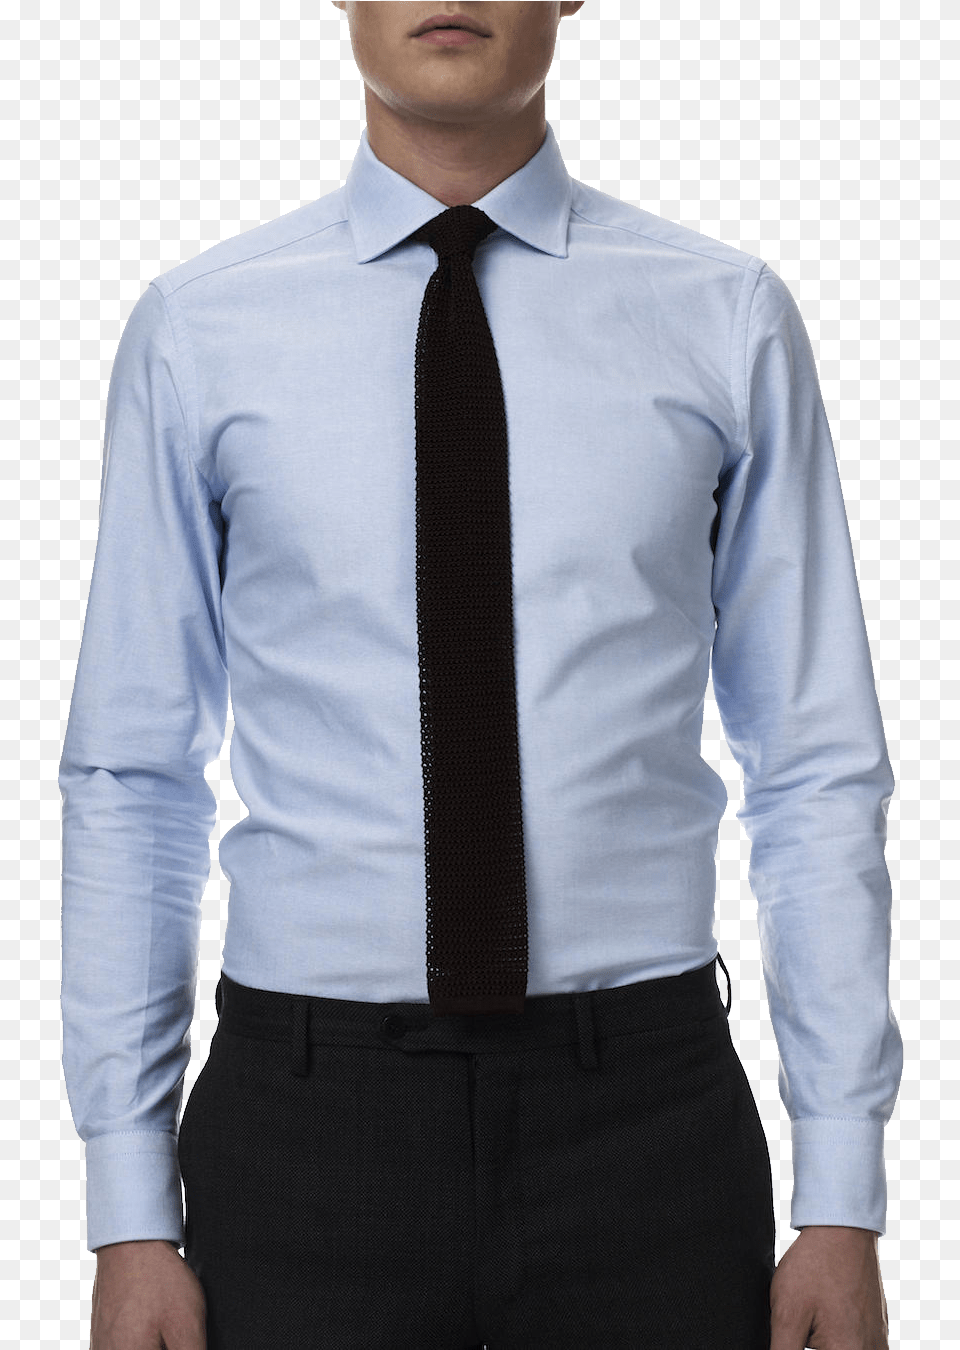 Download Llight Blue Dress Shirt Black Tie For Blue Shirt Black Tie, Accessories, Clothing, Dress Shirt, Formal Wear Free Transparent Png